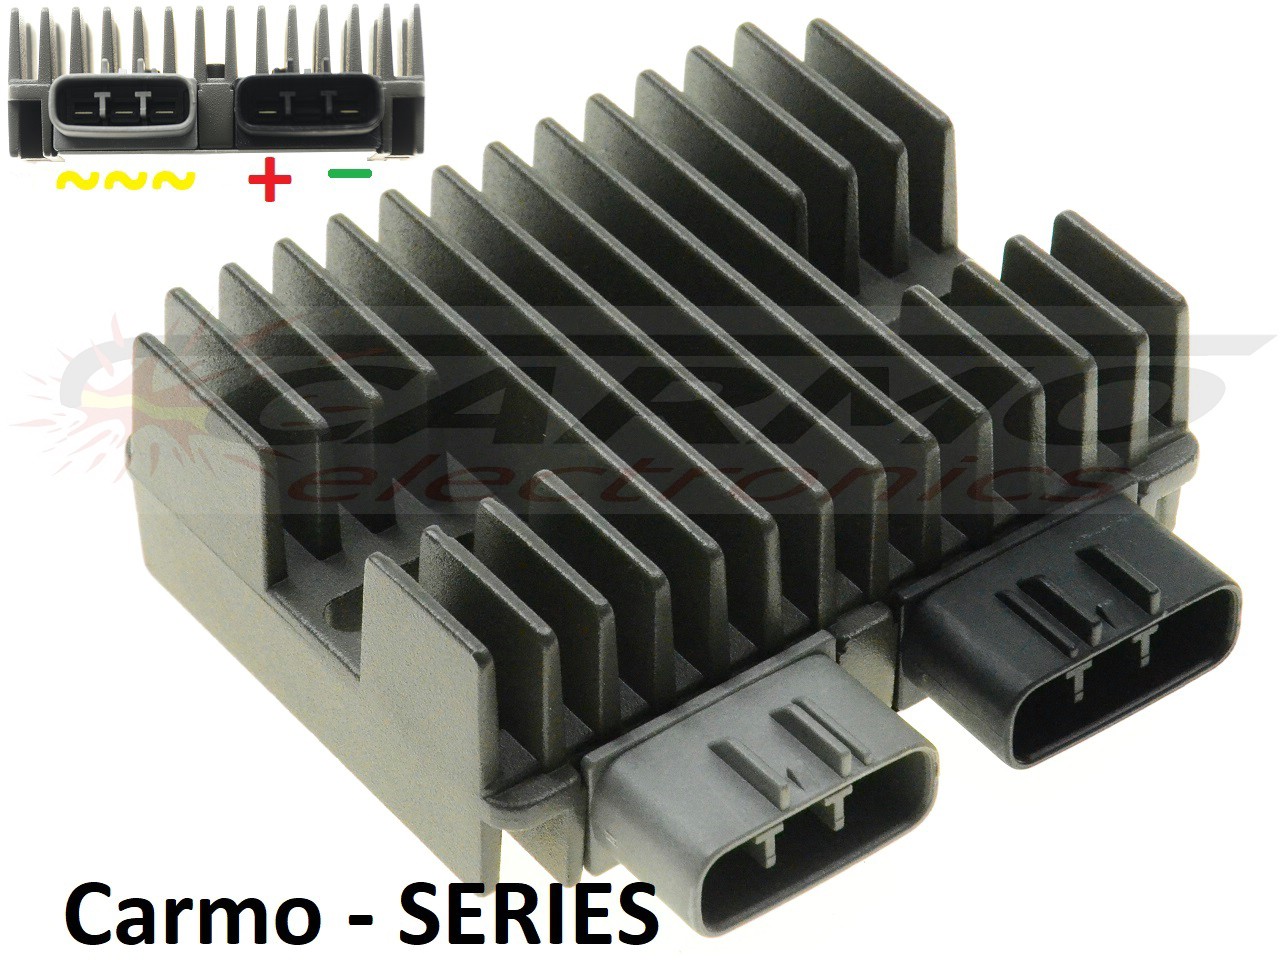 CARR5925-SERIE - MOSFET SERIE SERIES Rectificador de regulador de voltaje (Mejorado SH847) me gusta compu-fire - Haga click en la imagen para cerrar